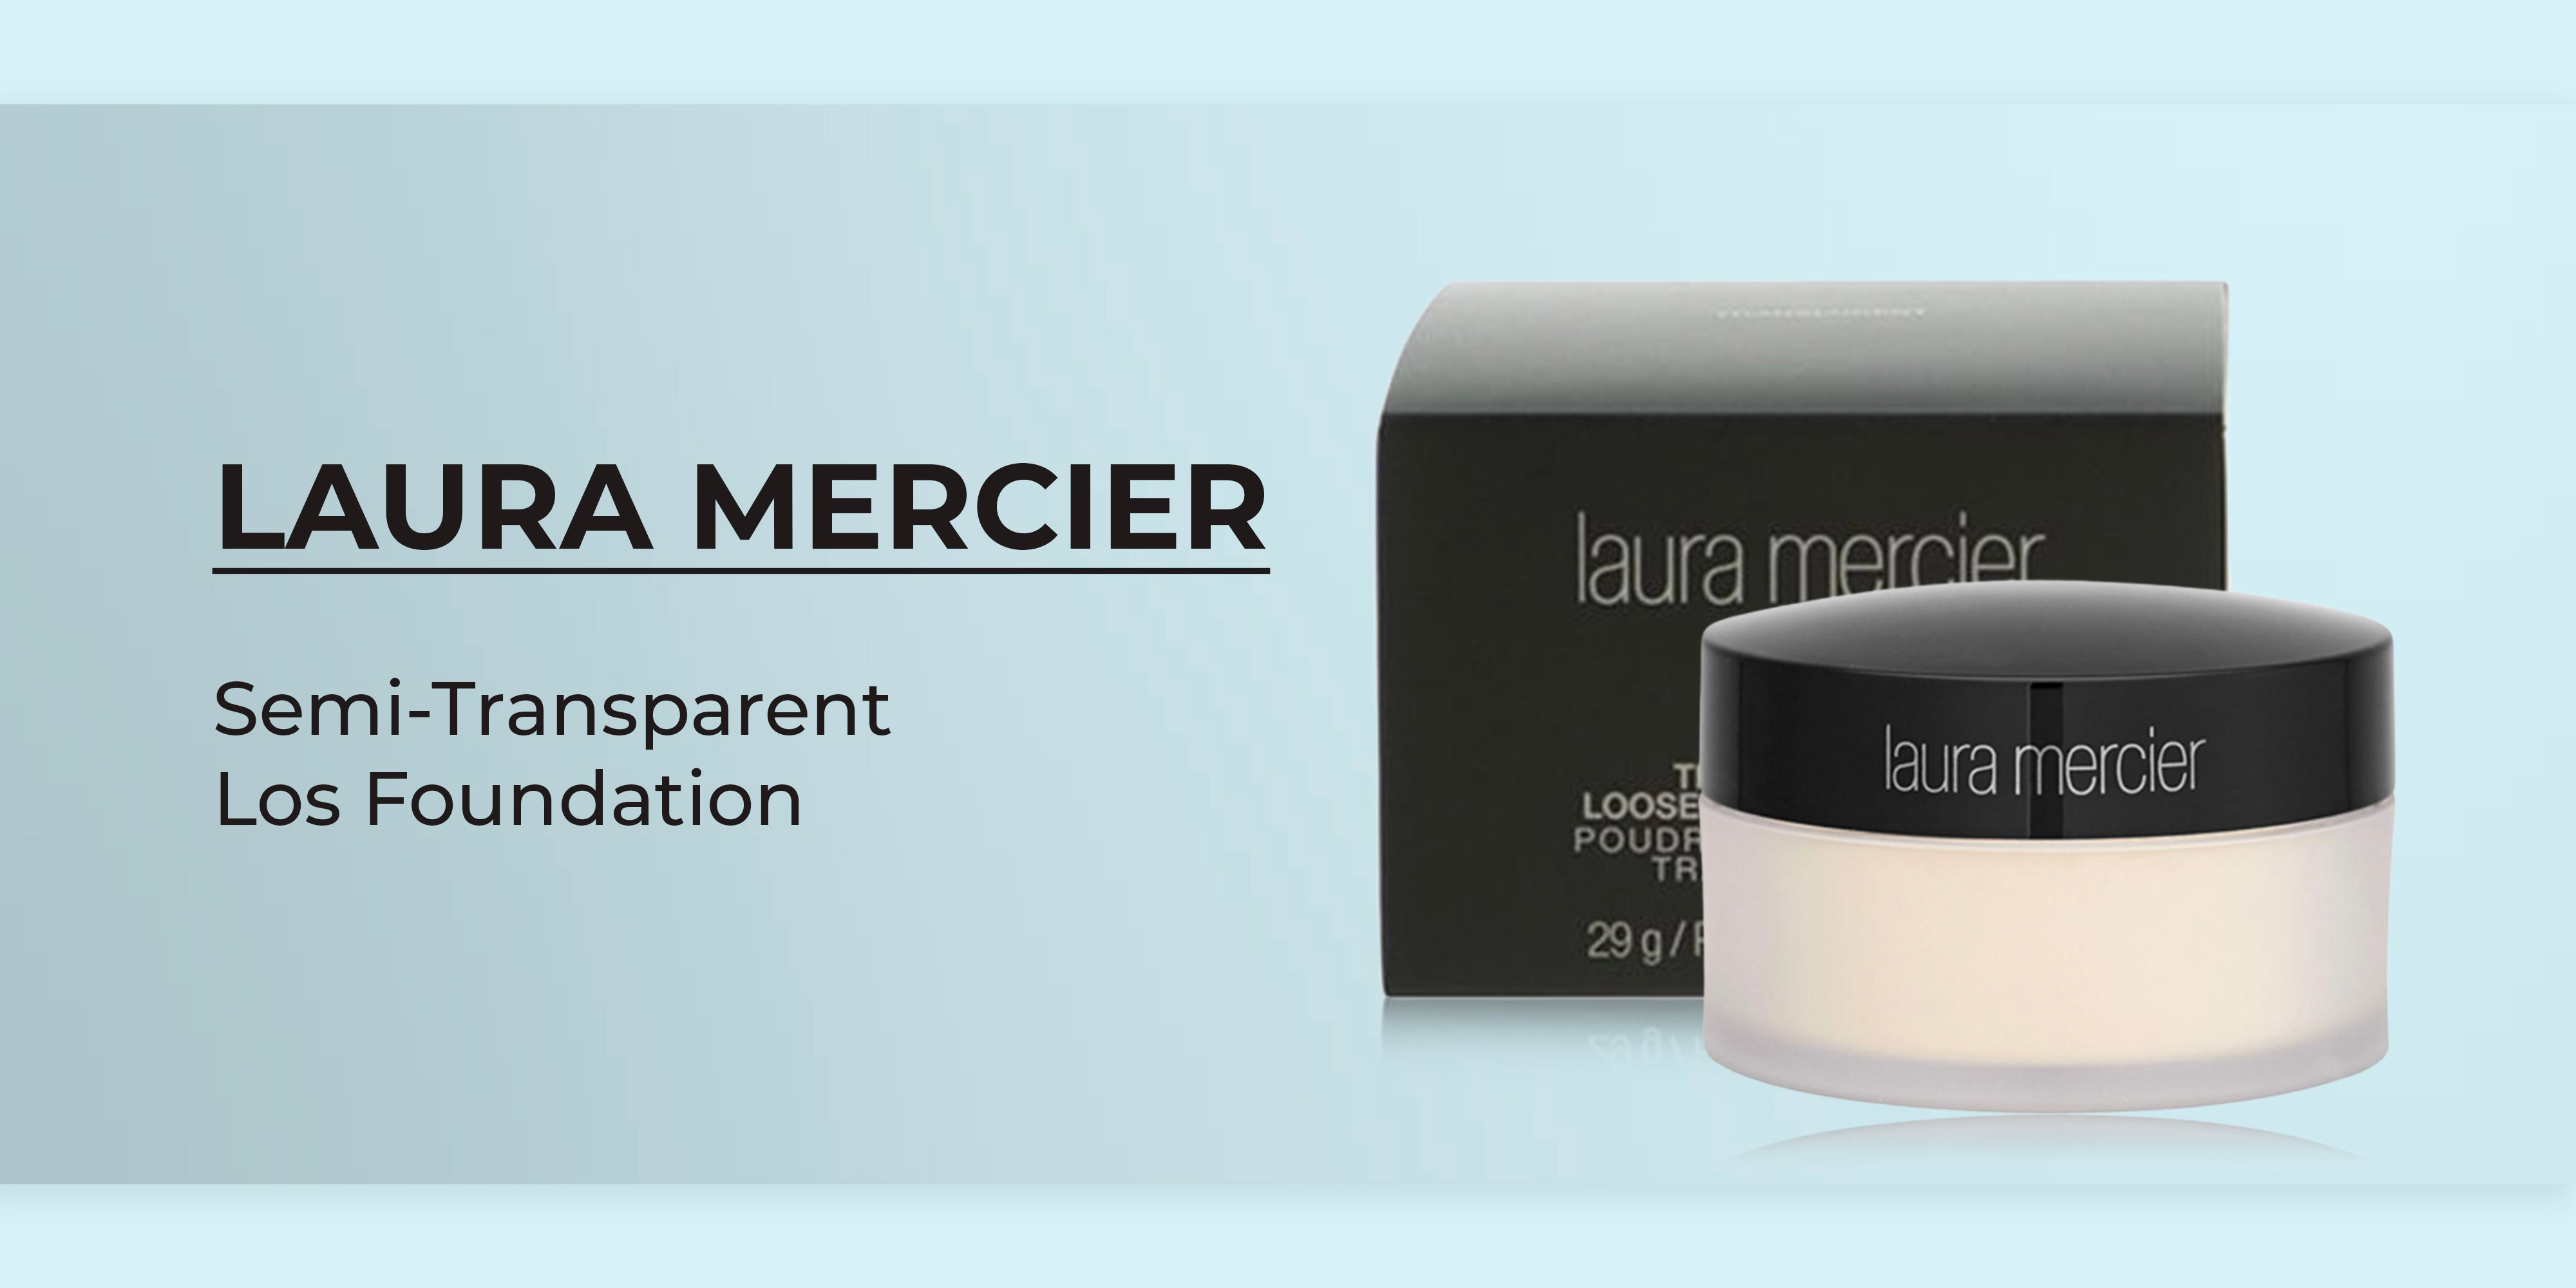 Laura Mercier Translucent Loose Setting Powder - Honey Women 1 oz